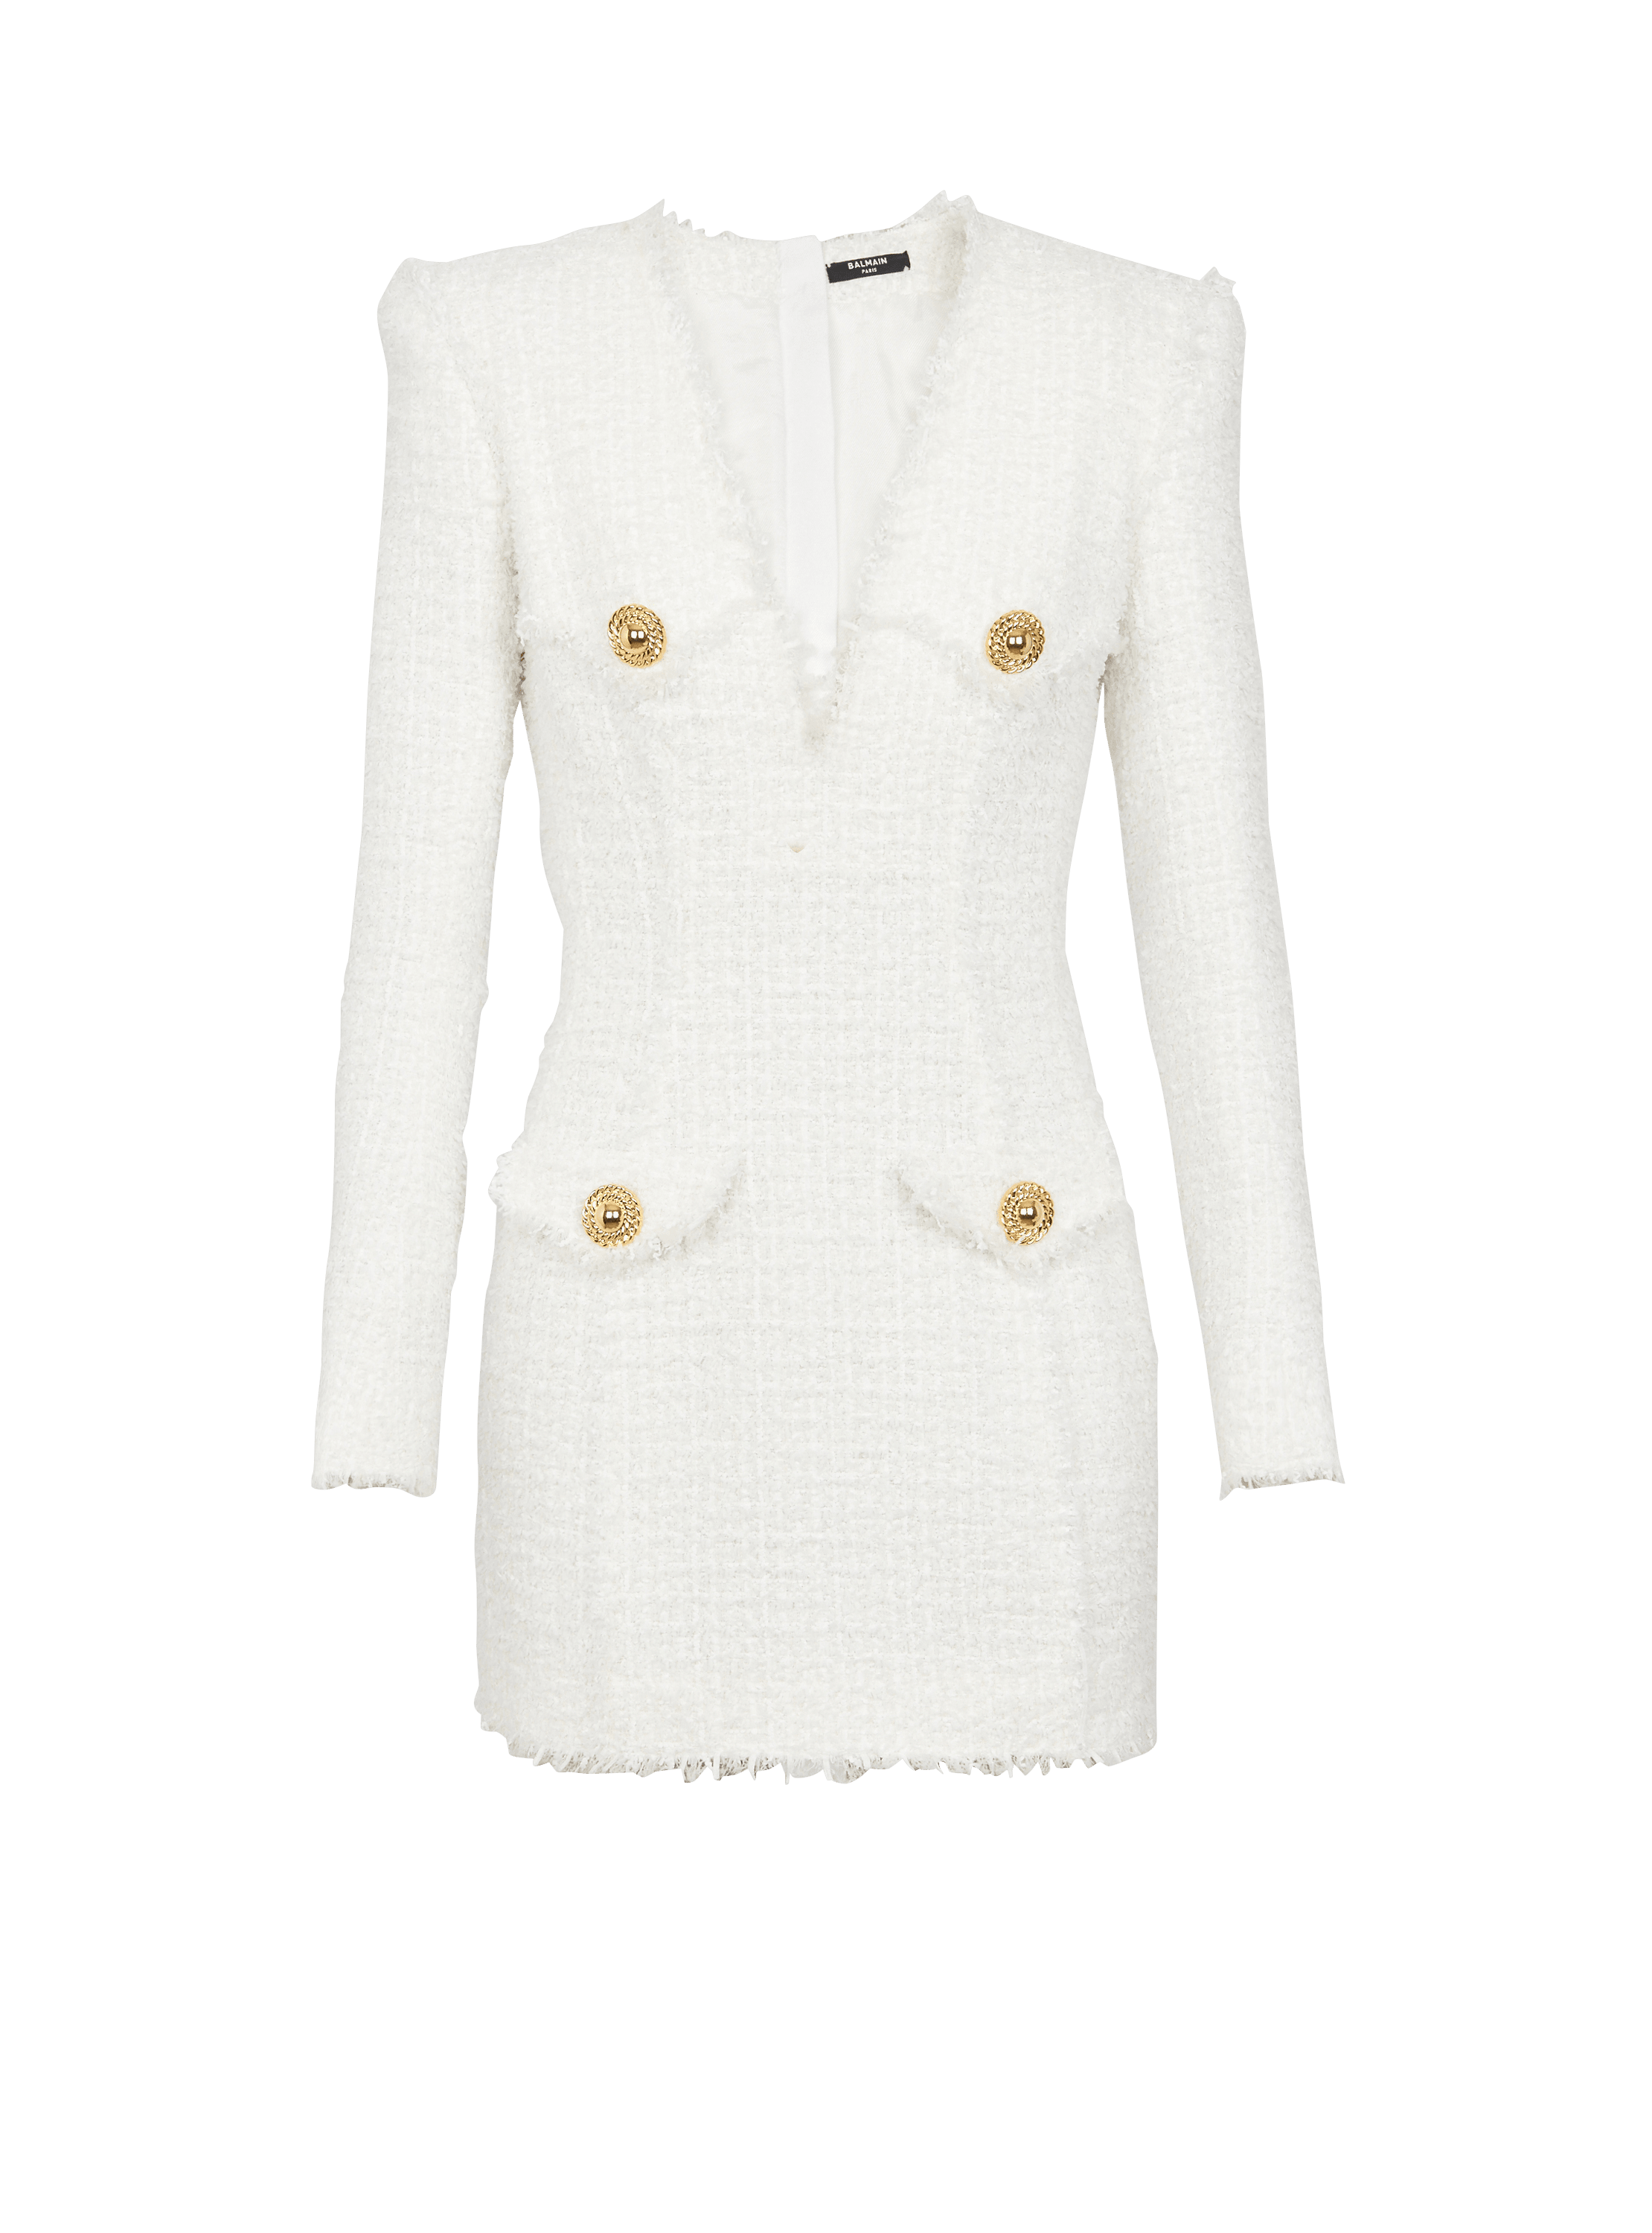 Short 4-button tweed dress